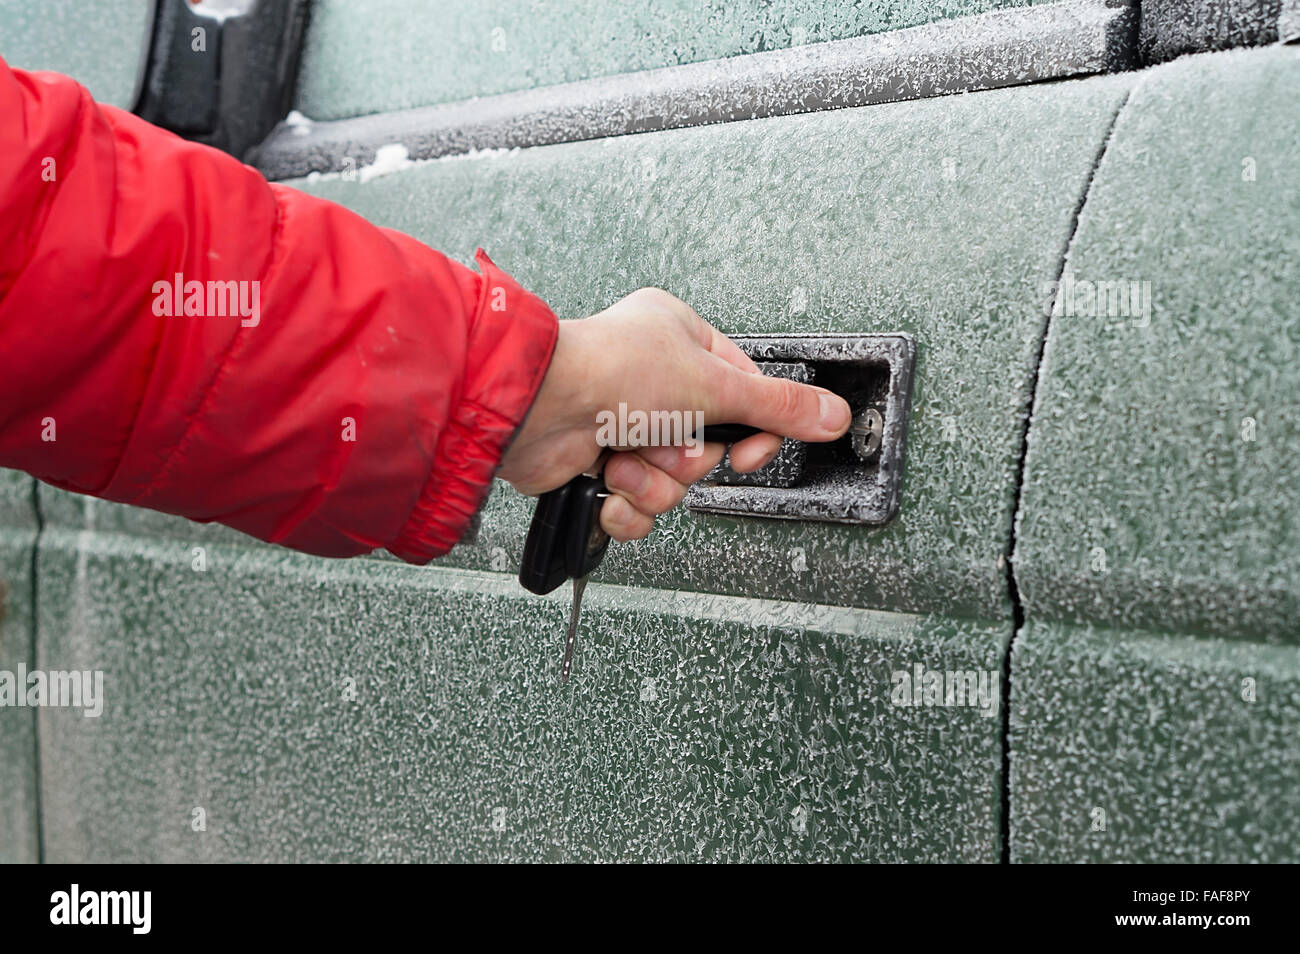 icy car door lock Stock Photo - Alamy